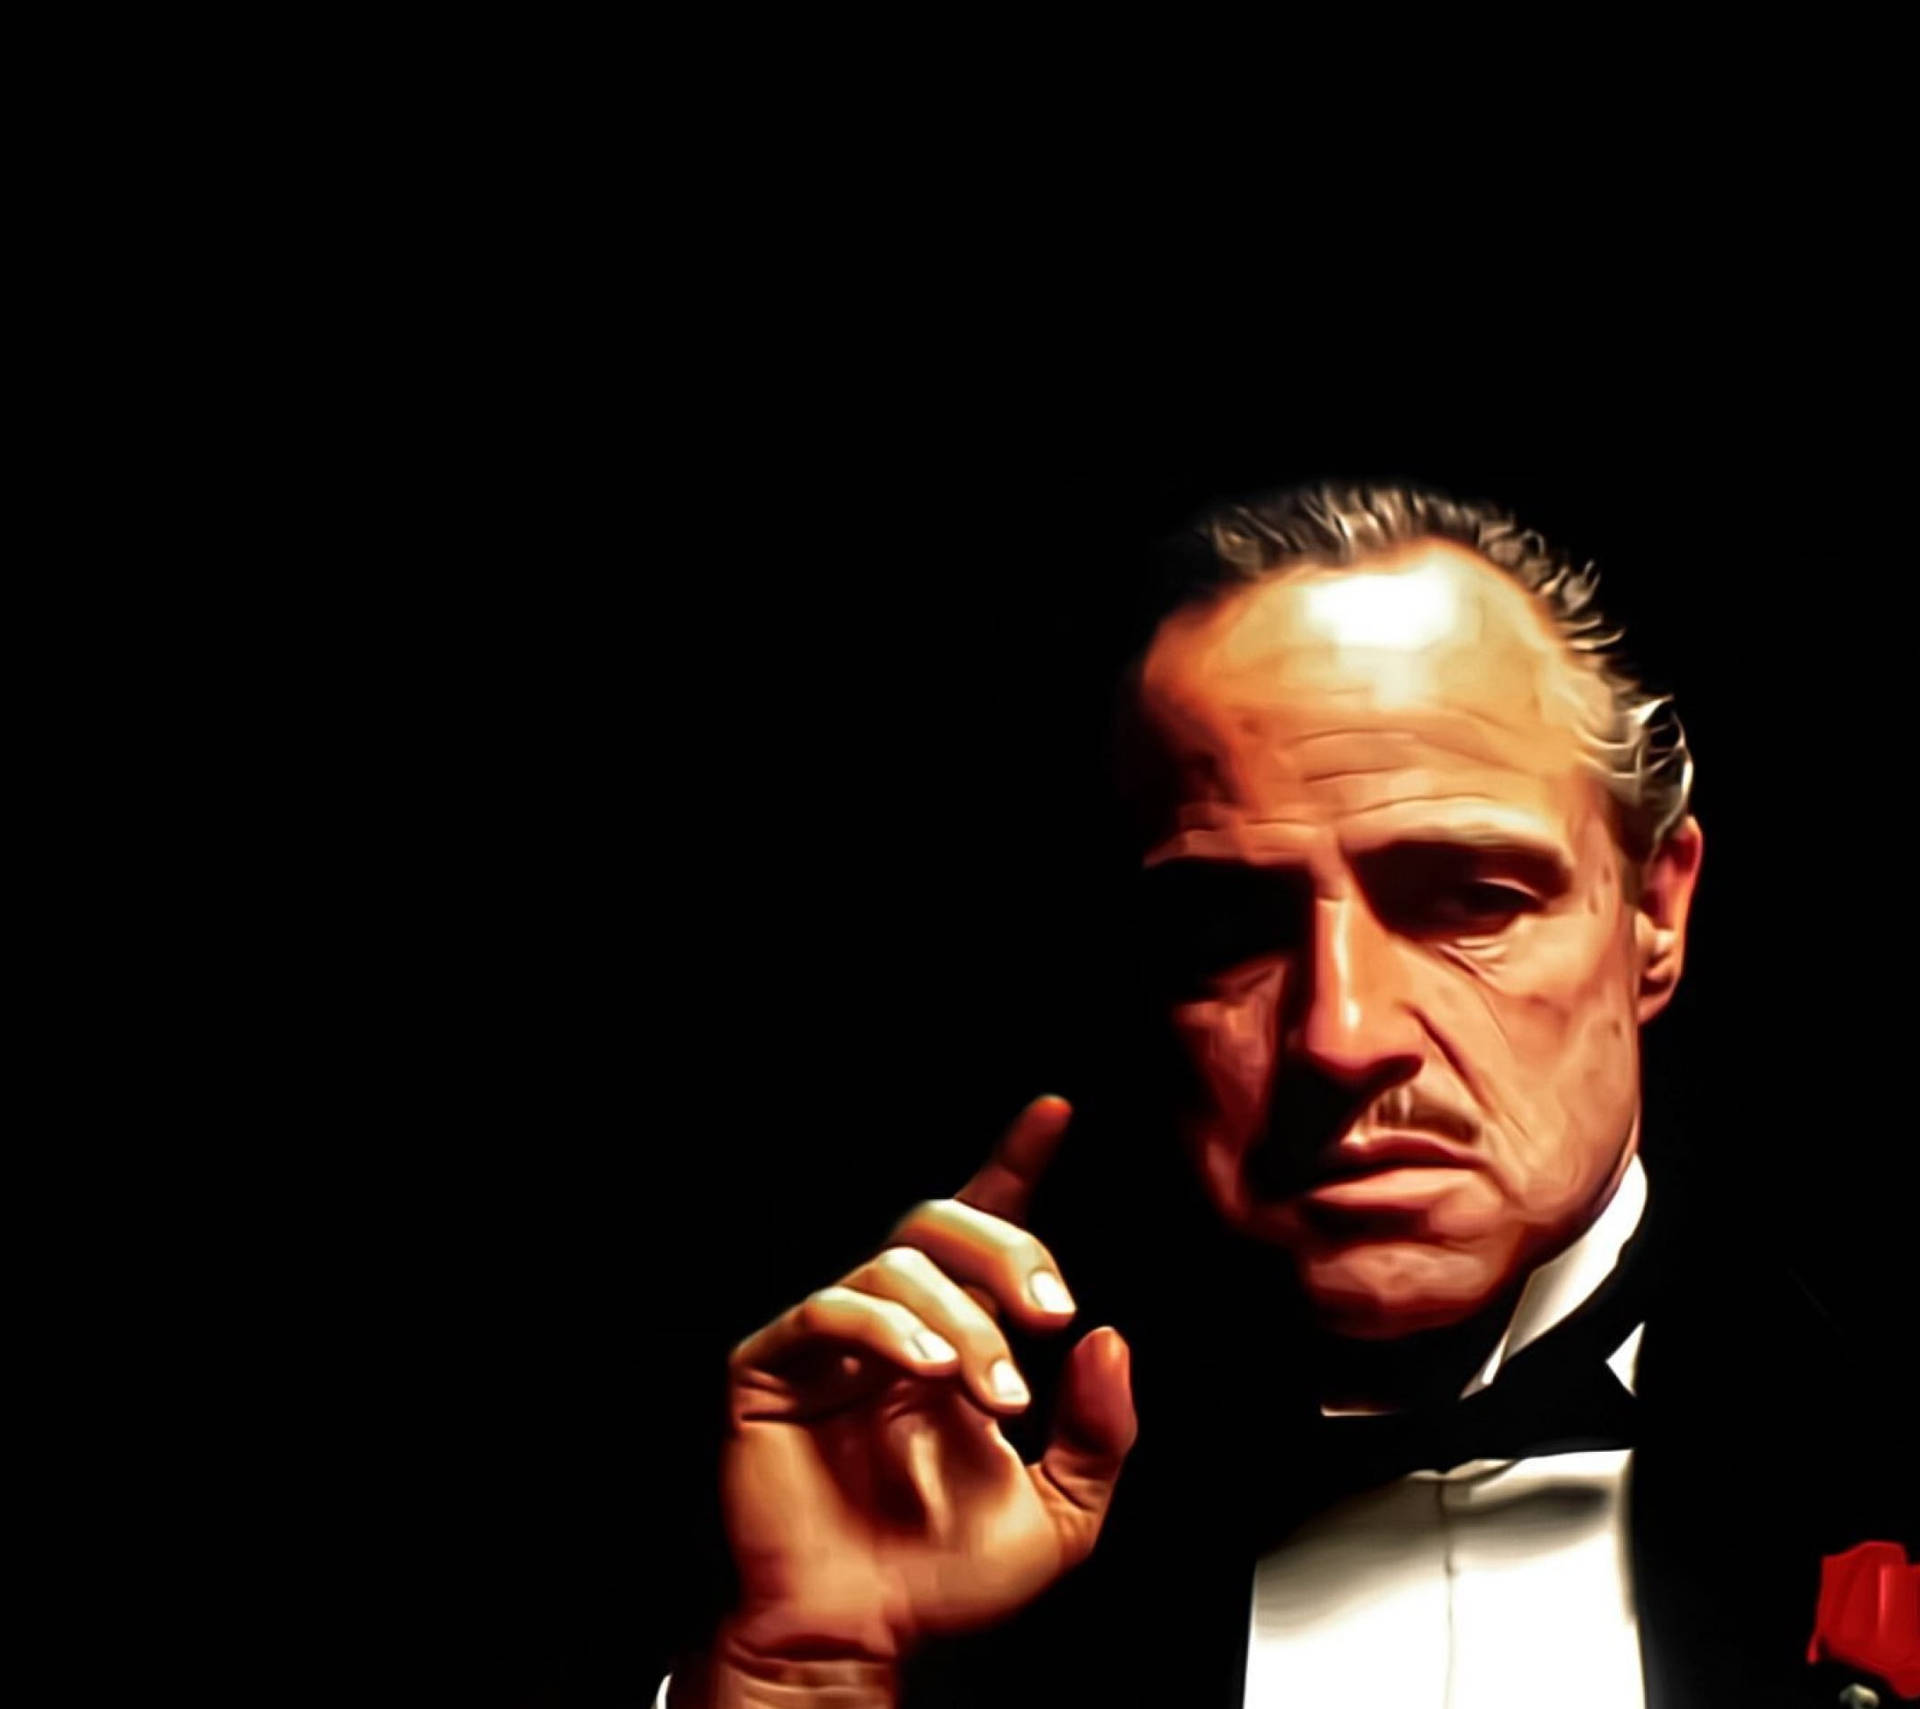 Colored The Godfather Mafia Boss Background